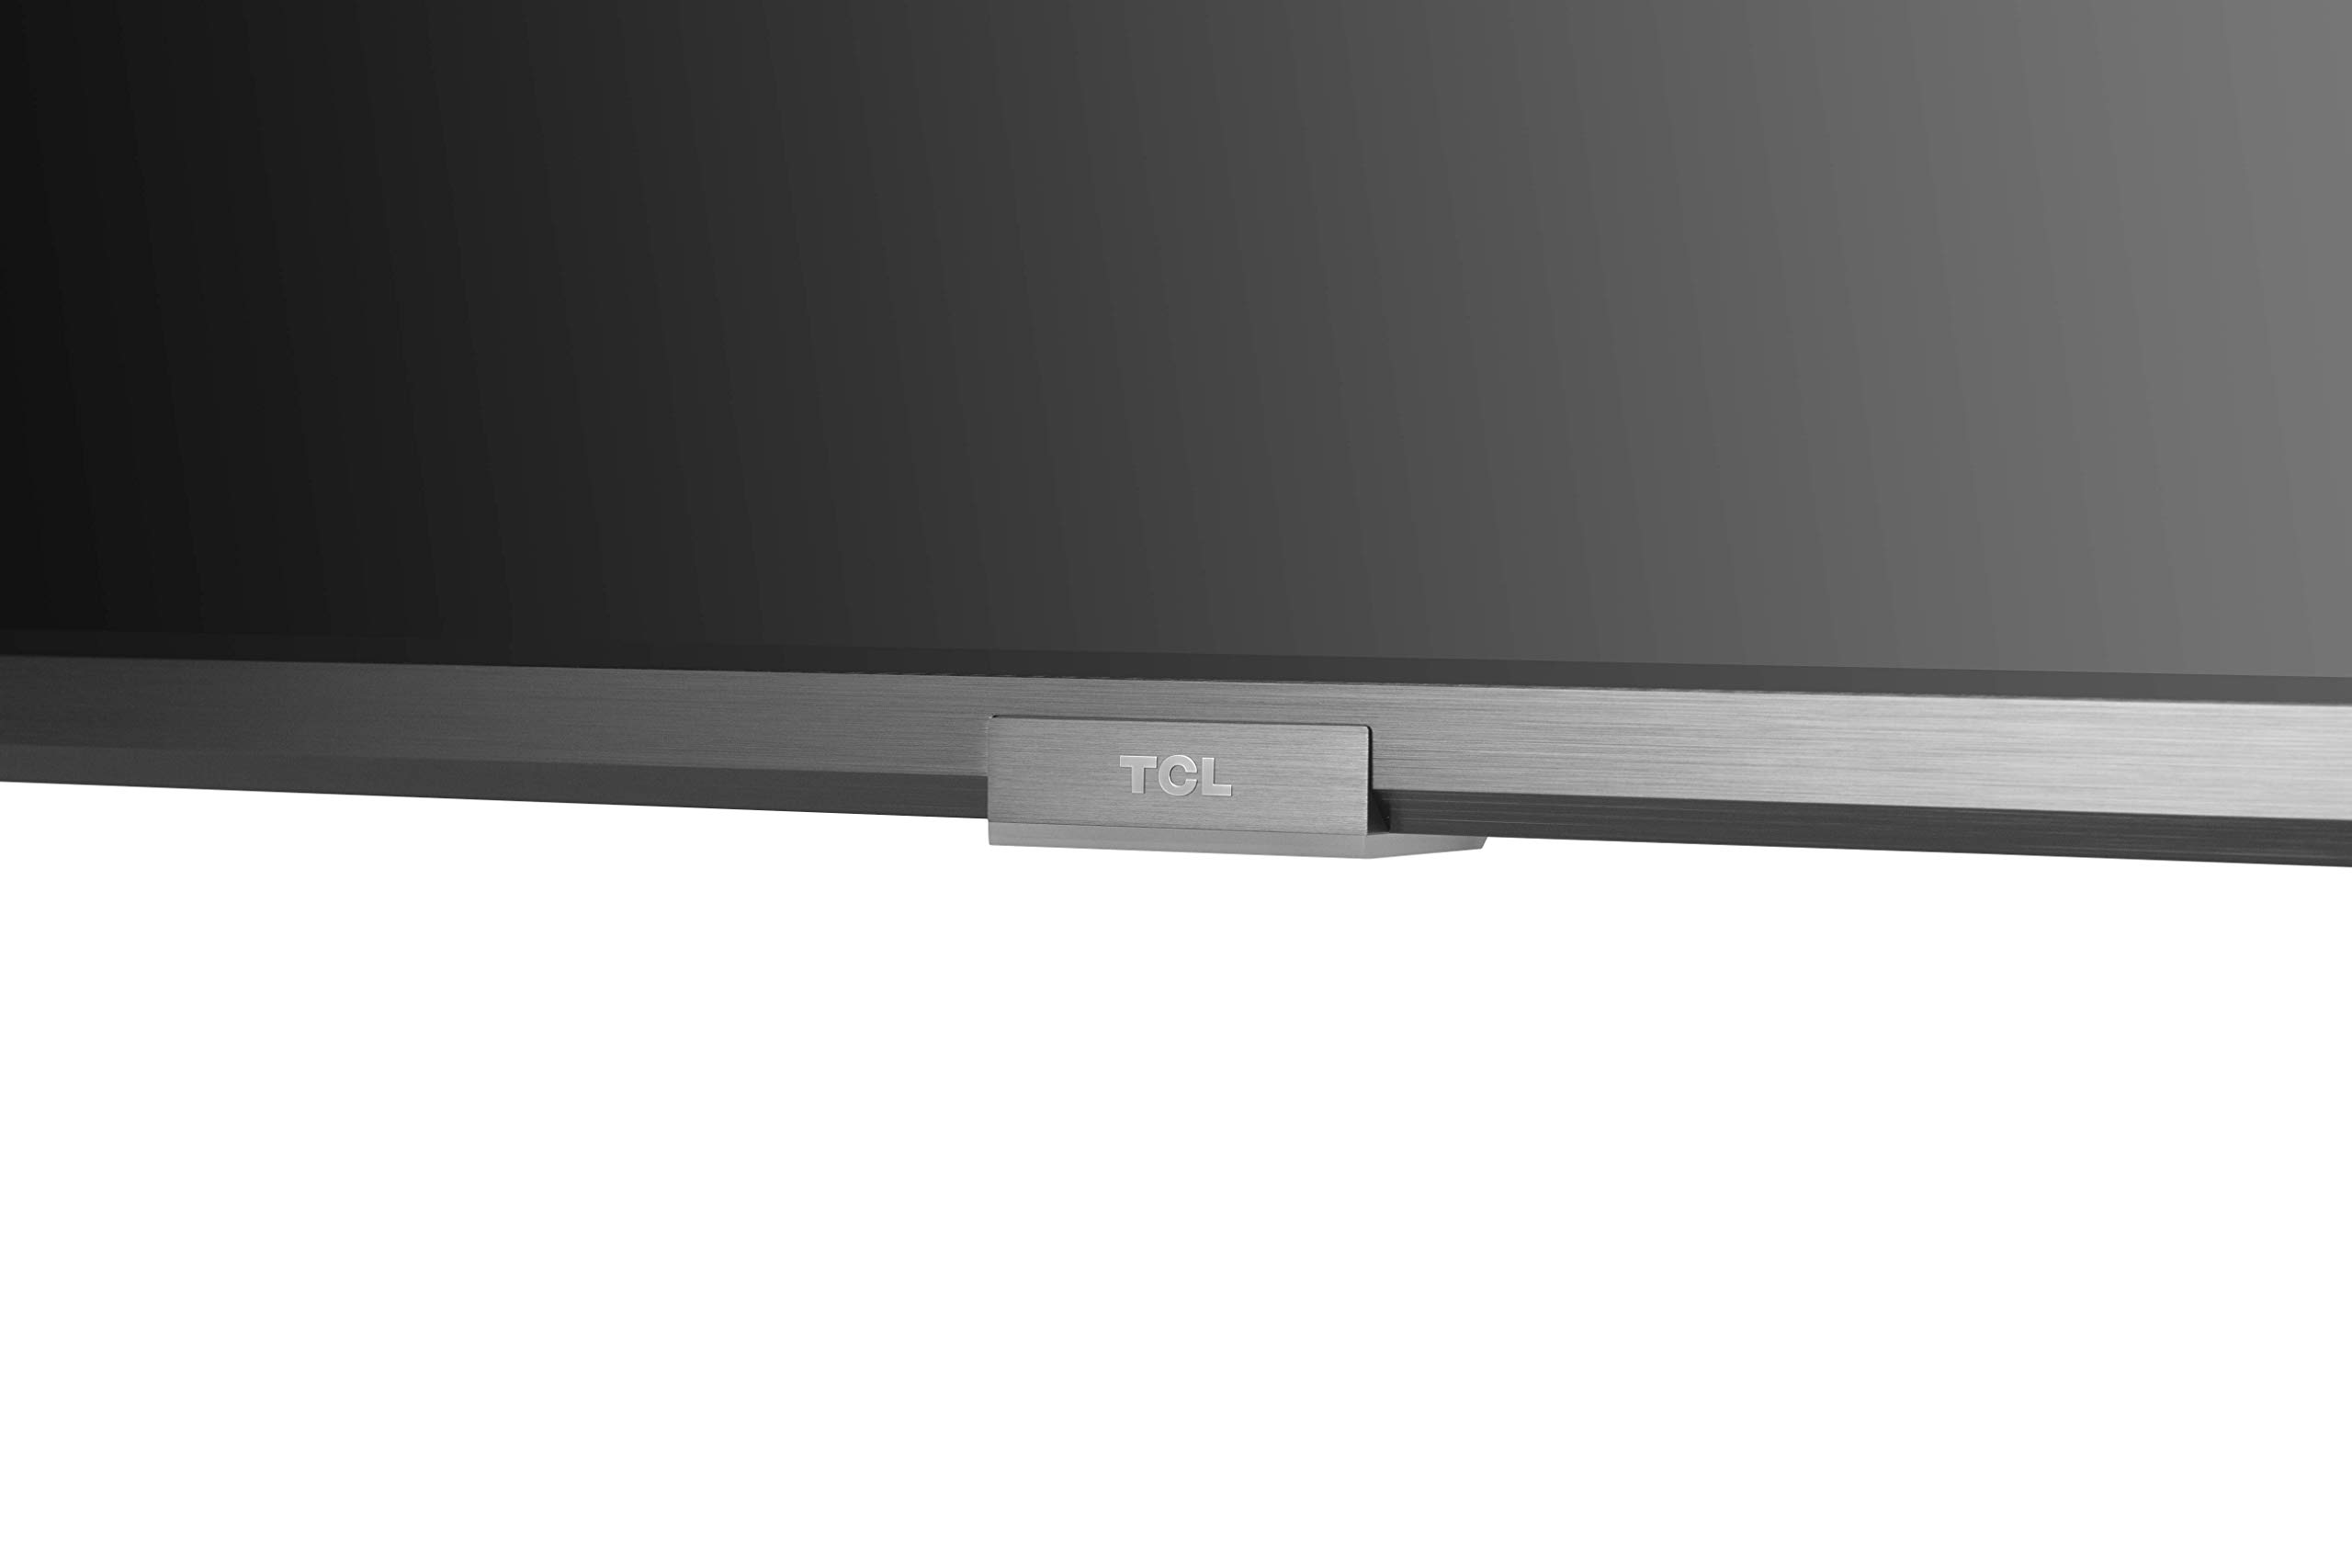 TCL 75-inch 6-Series 4K UHD Dolby Vision HDR QLED Roku Smart TV - 75R635, 2021 Model